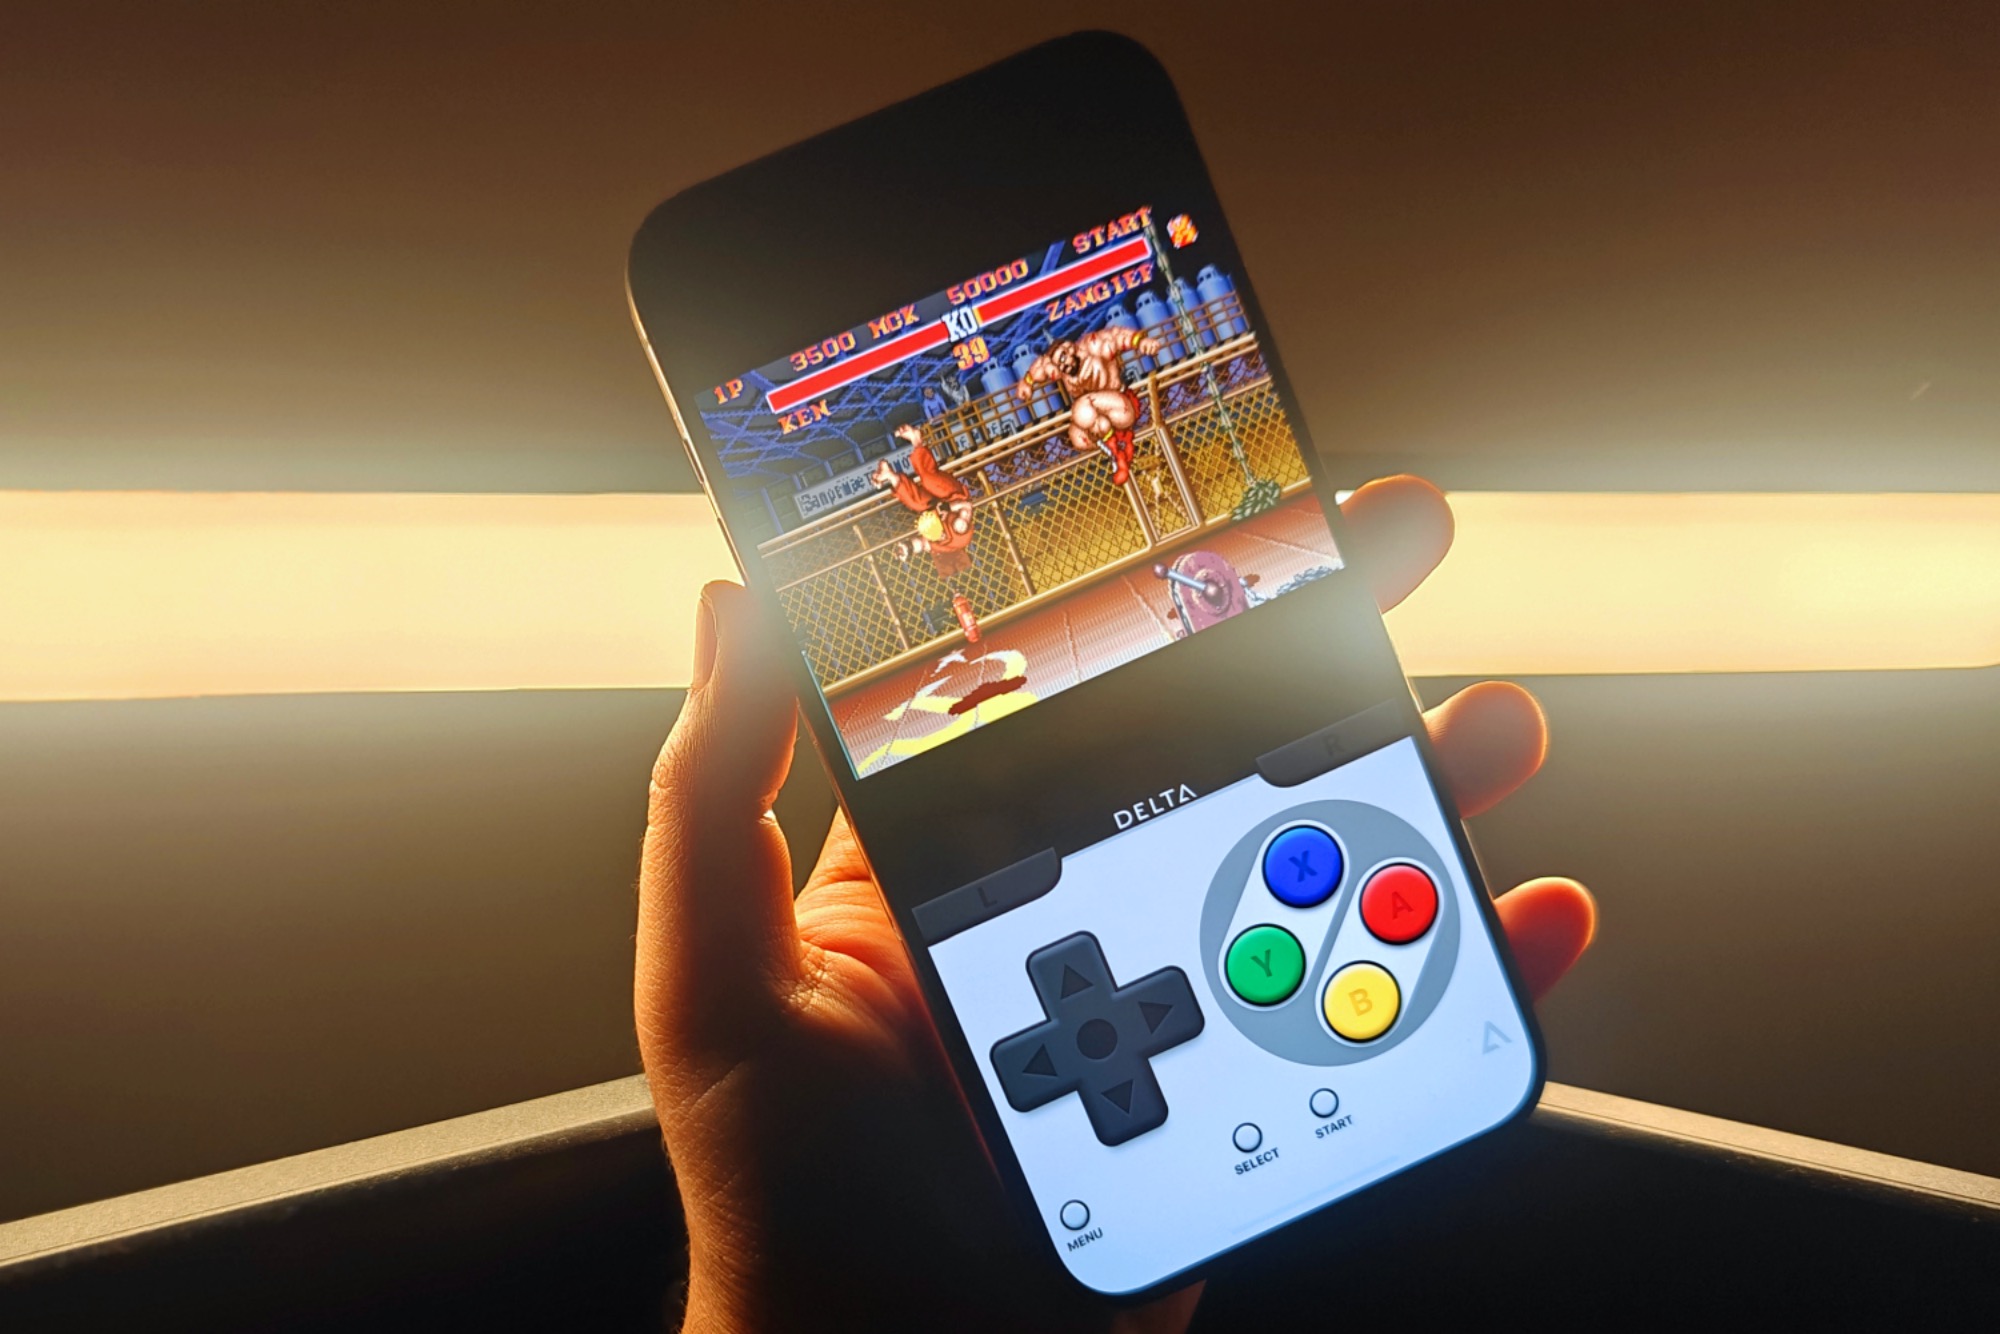 Street Fighter émulé sur un iPhone.